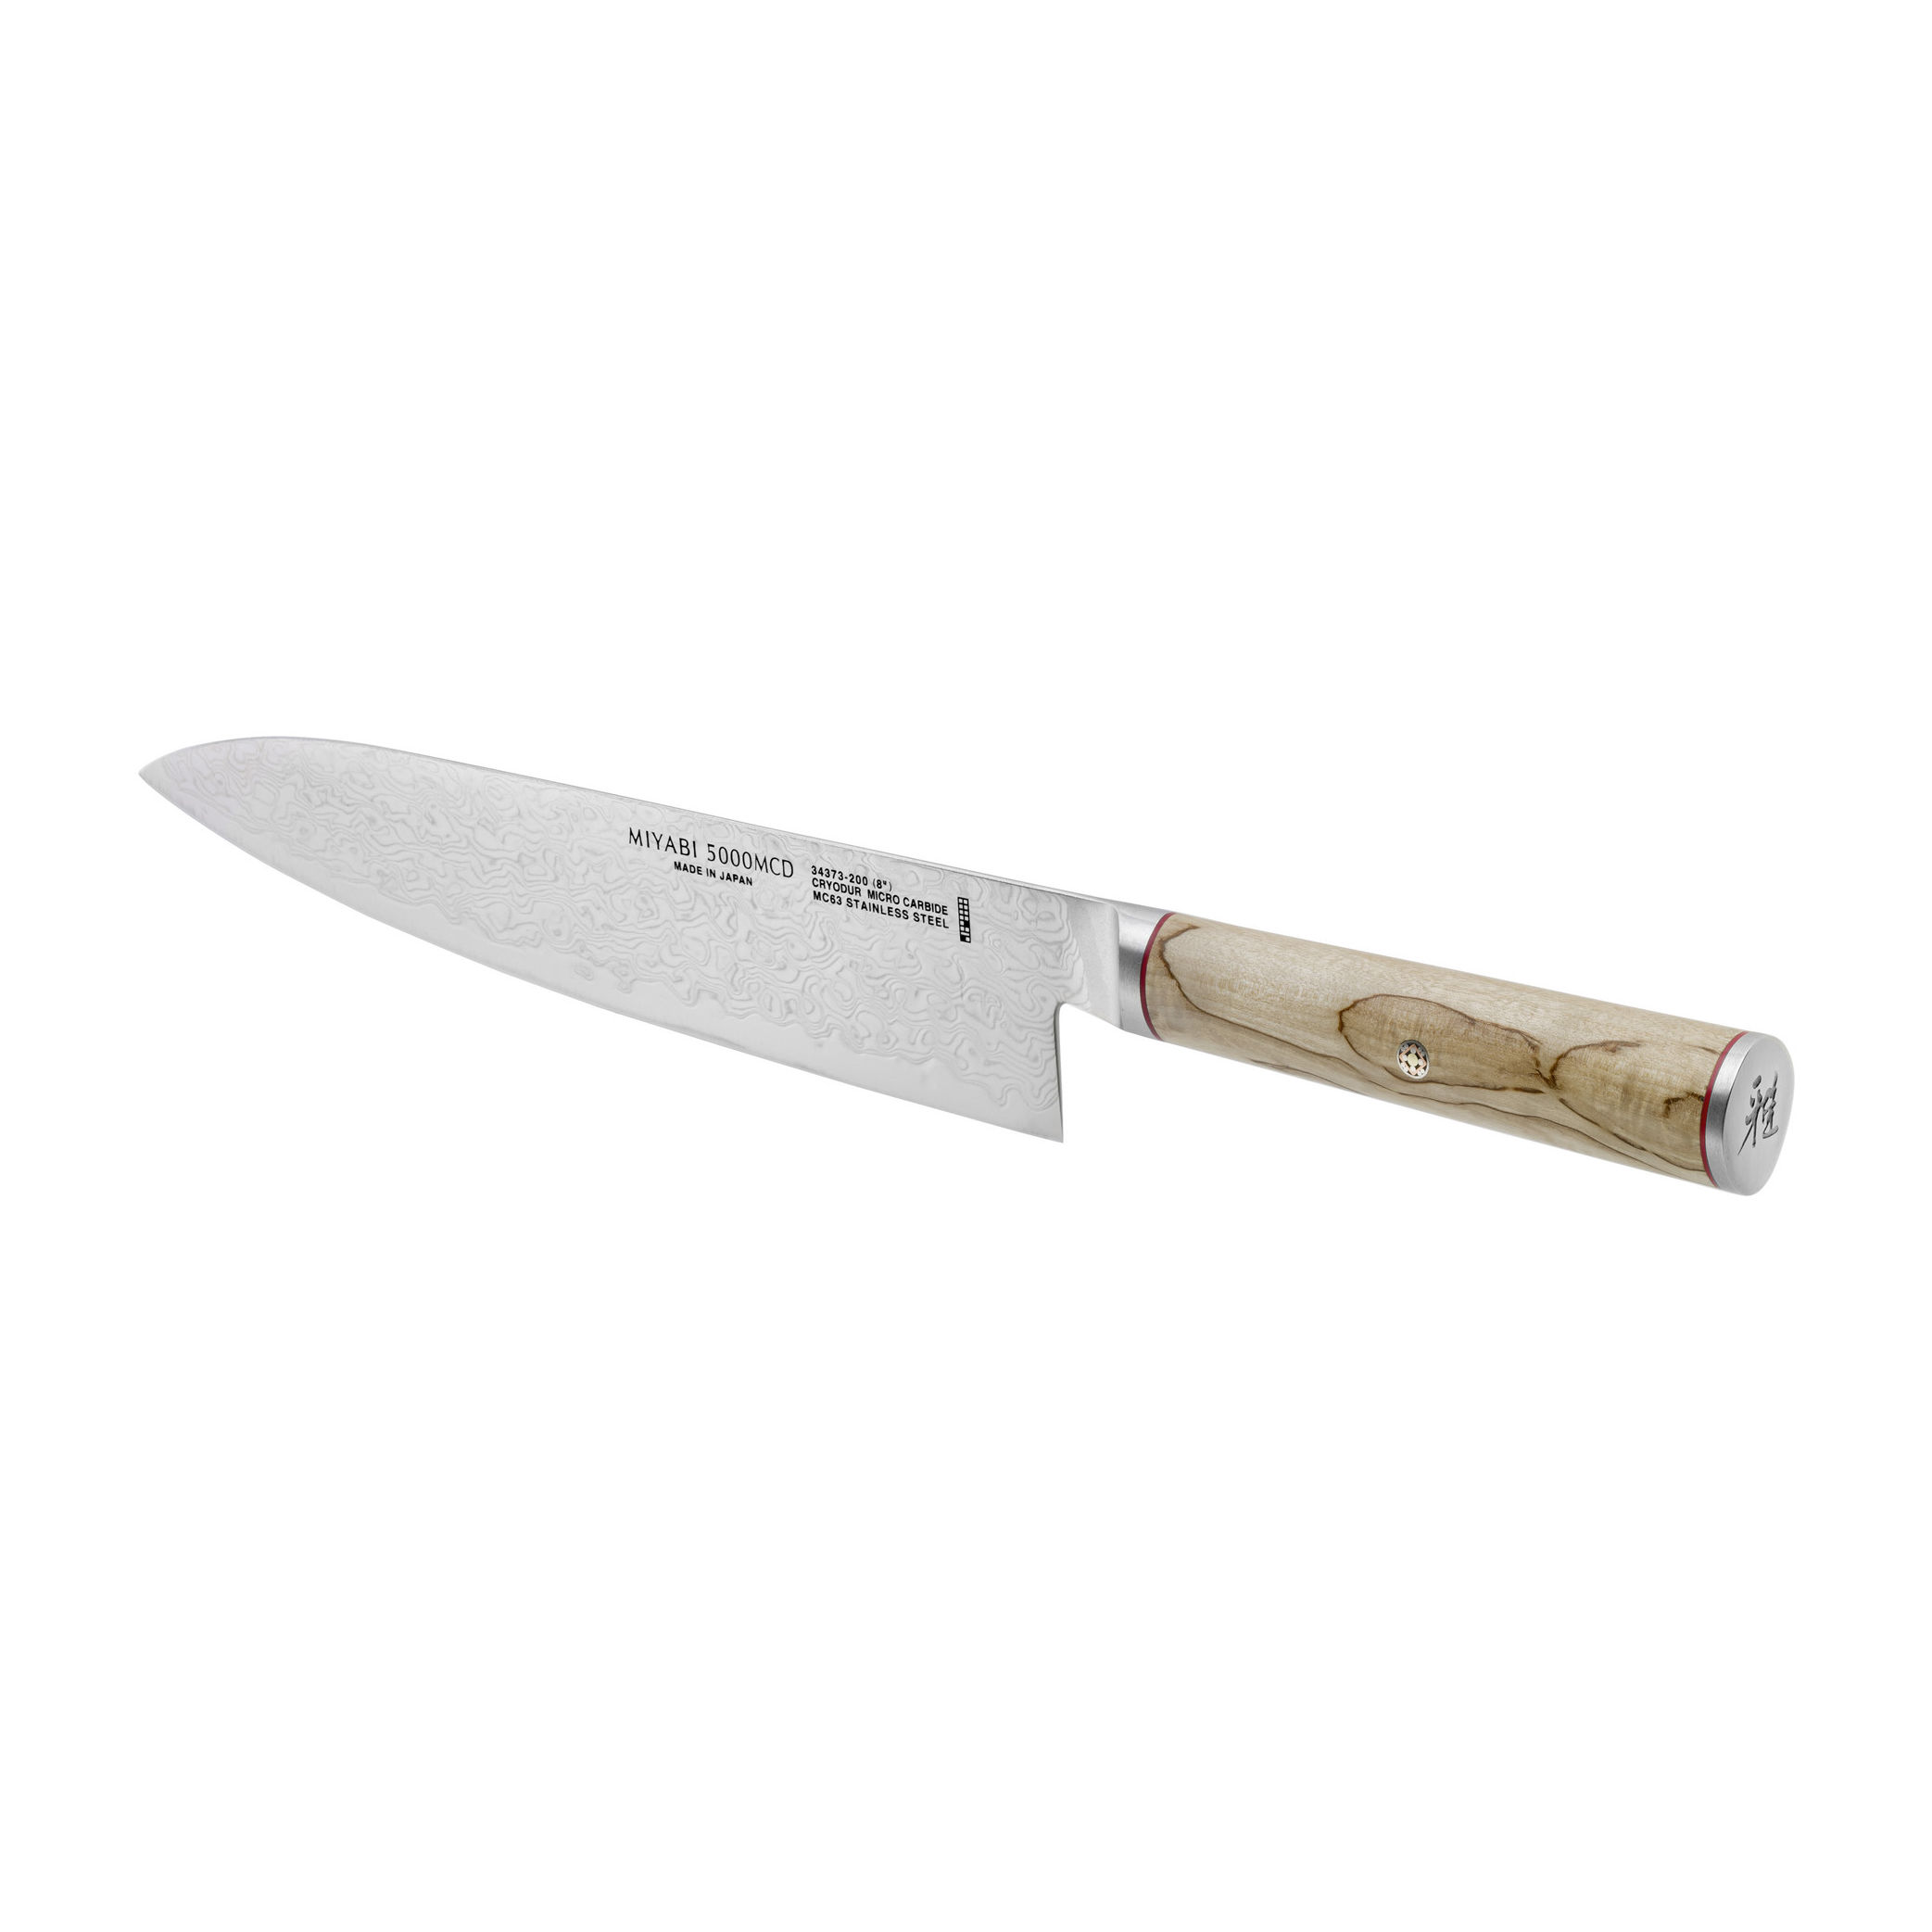 Miyabi birch wood)My first quality chef knife any suggestions on